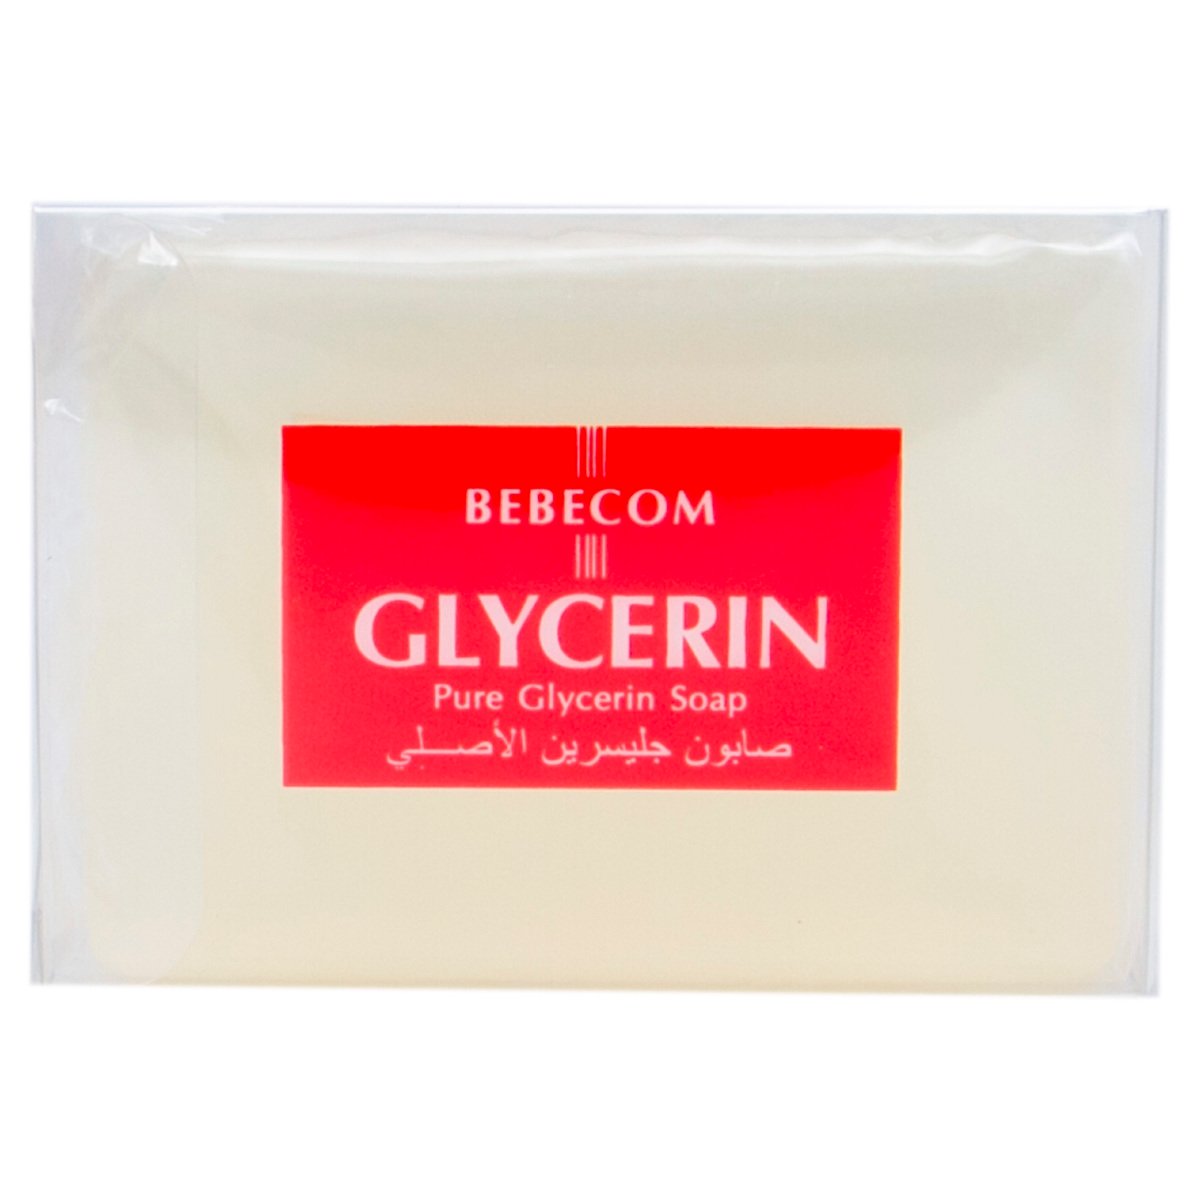 Bebecom Pure Glycerin Soap 150 g